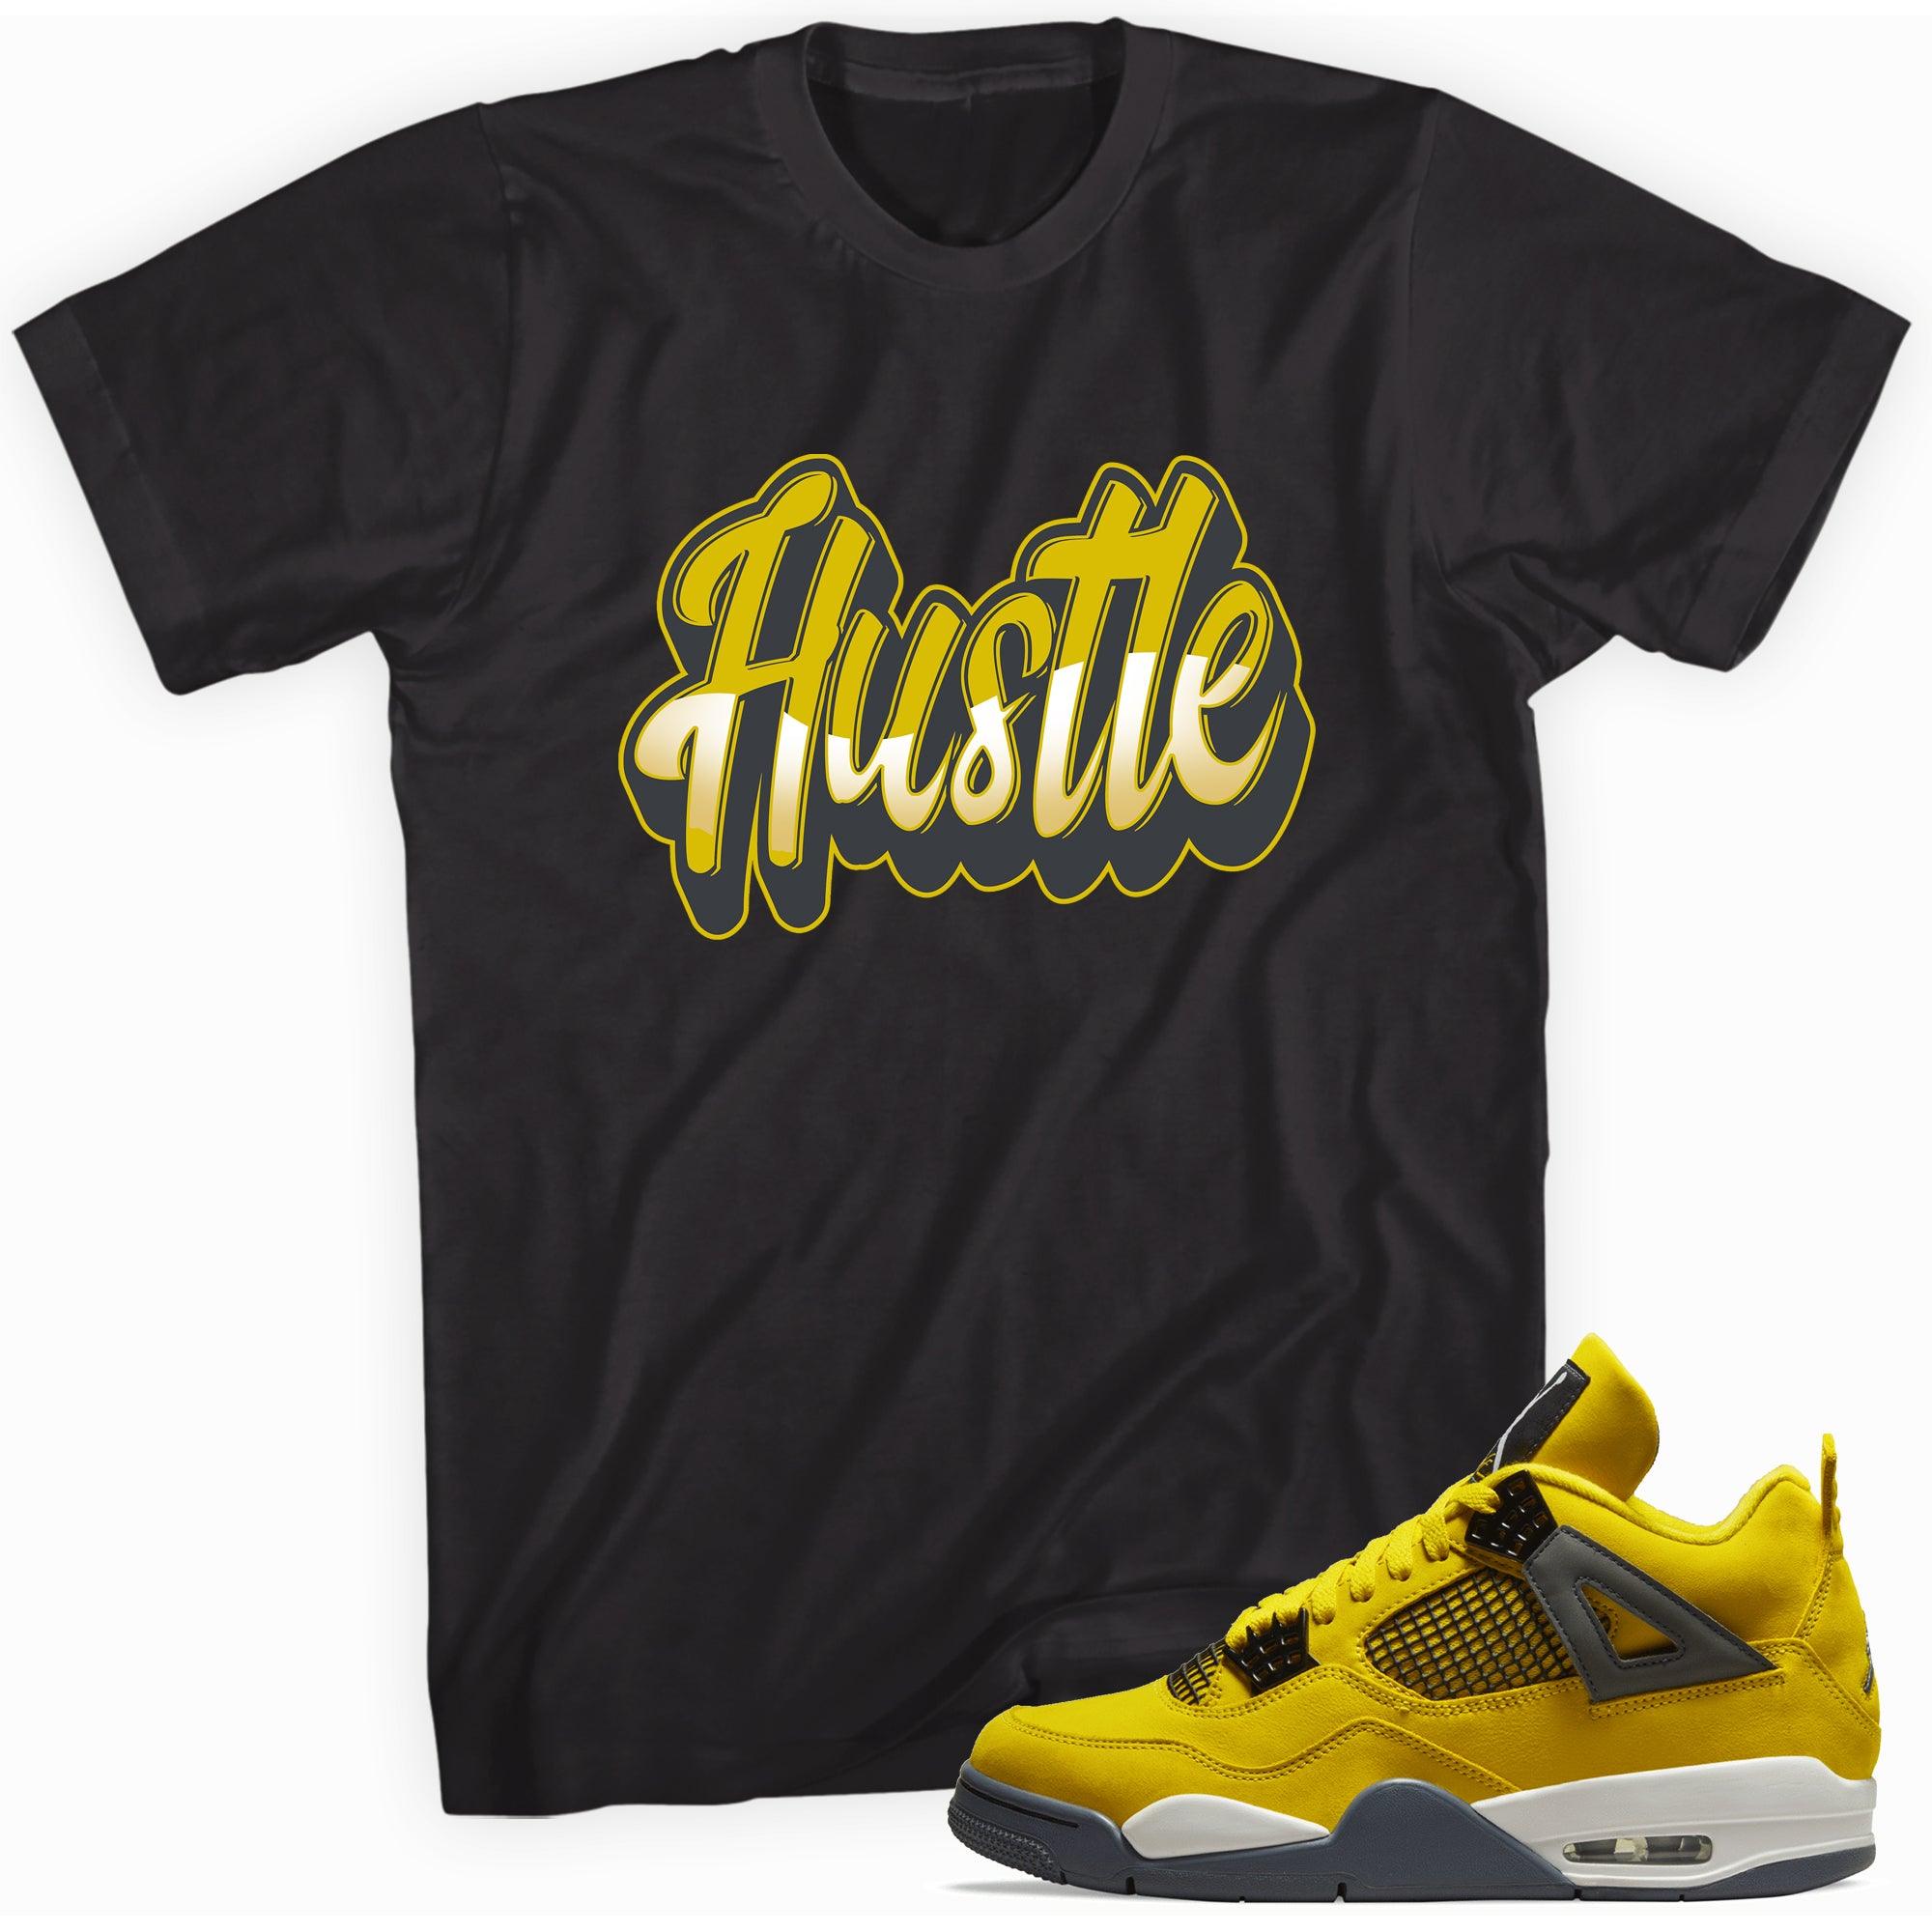 Black Hustle Shirt Jordan 4s Retro Lightning photo